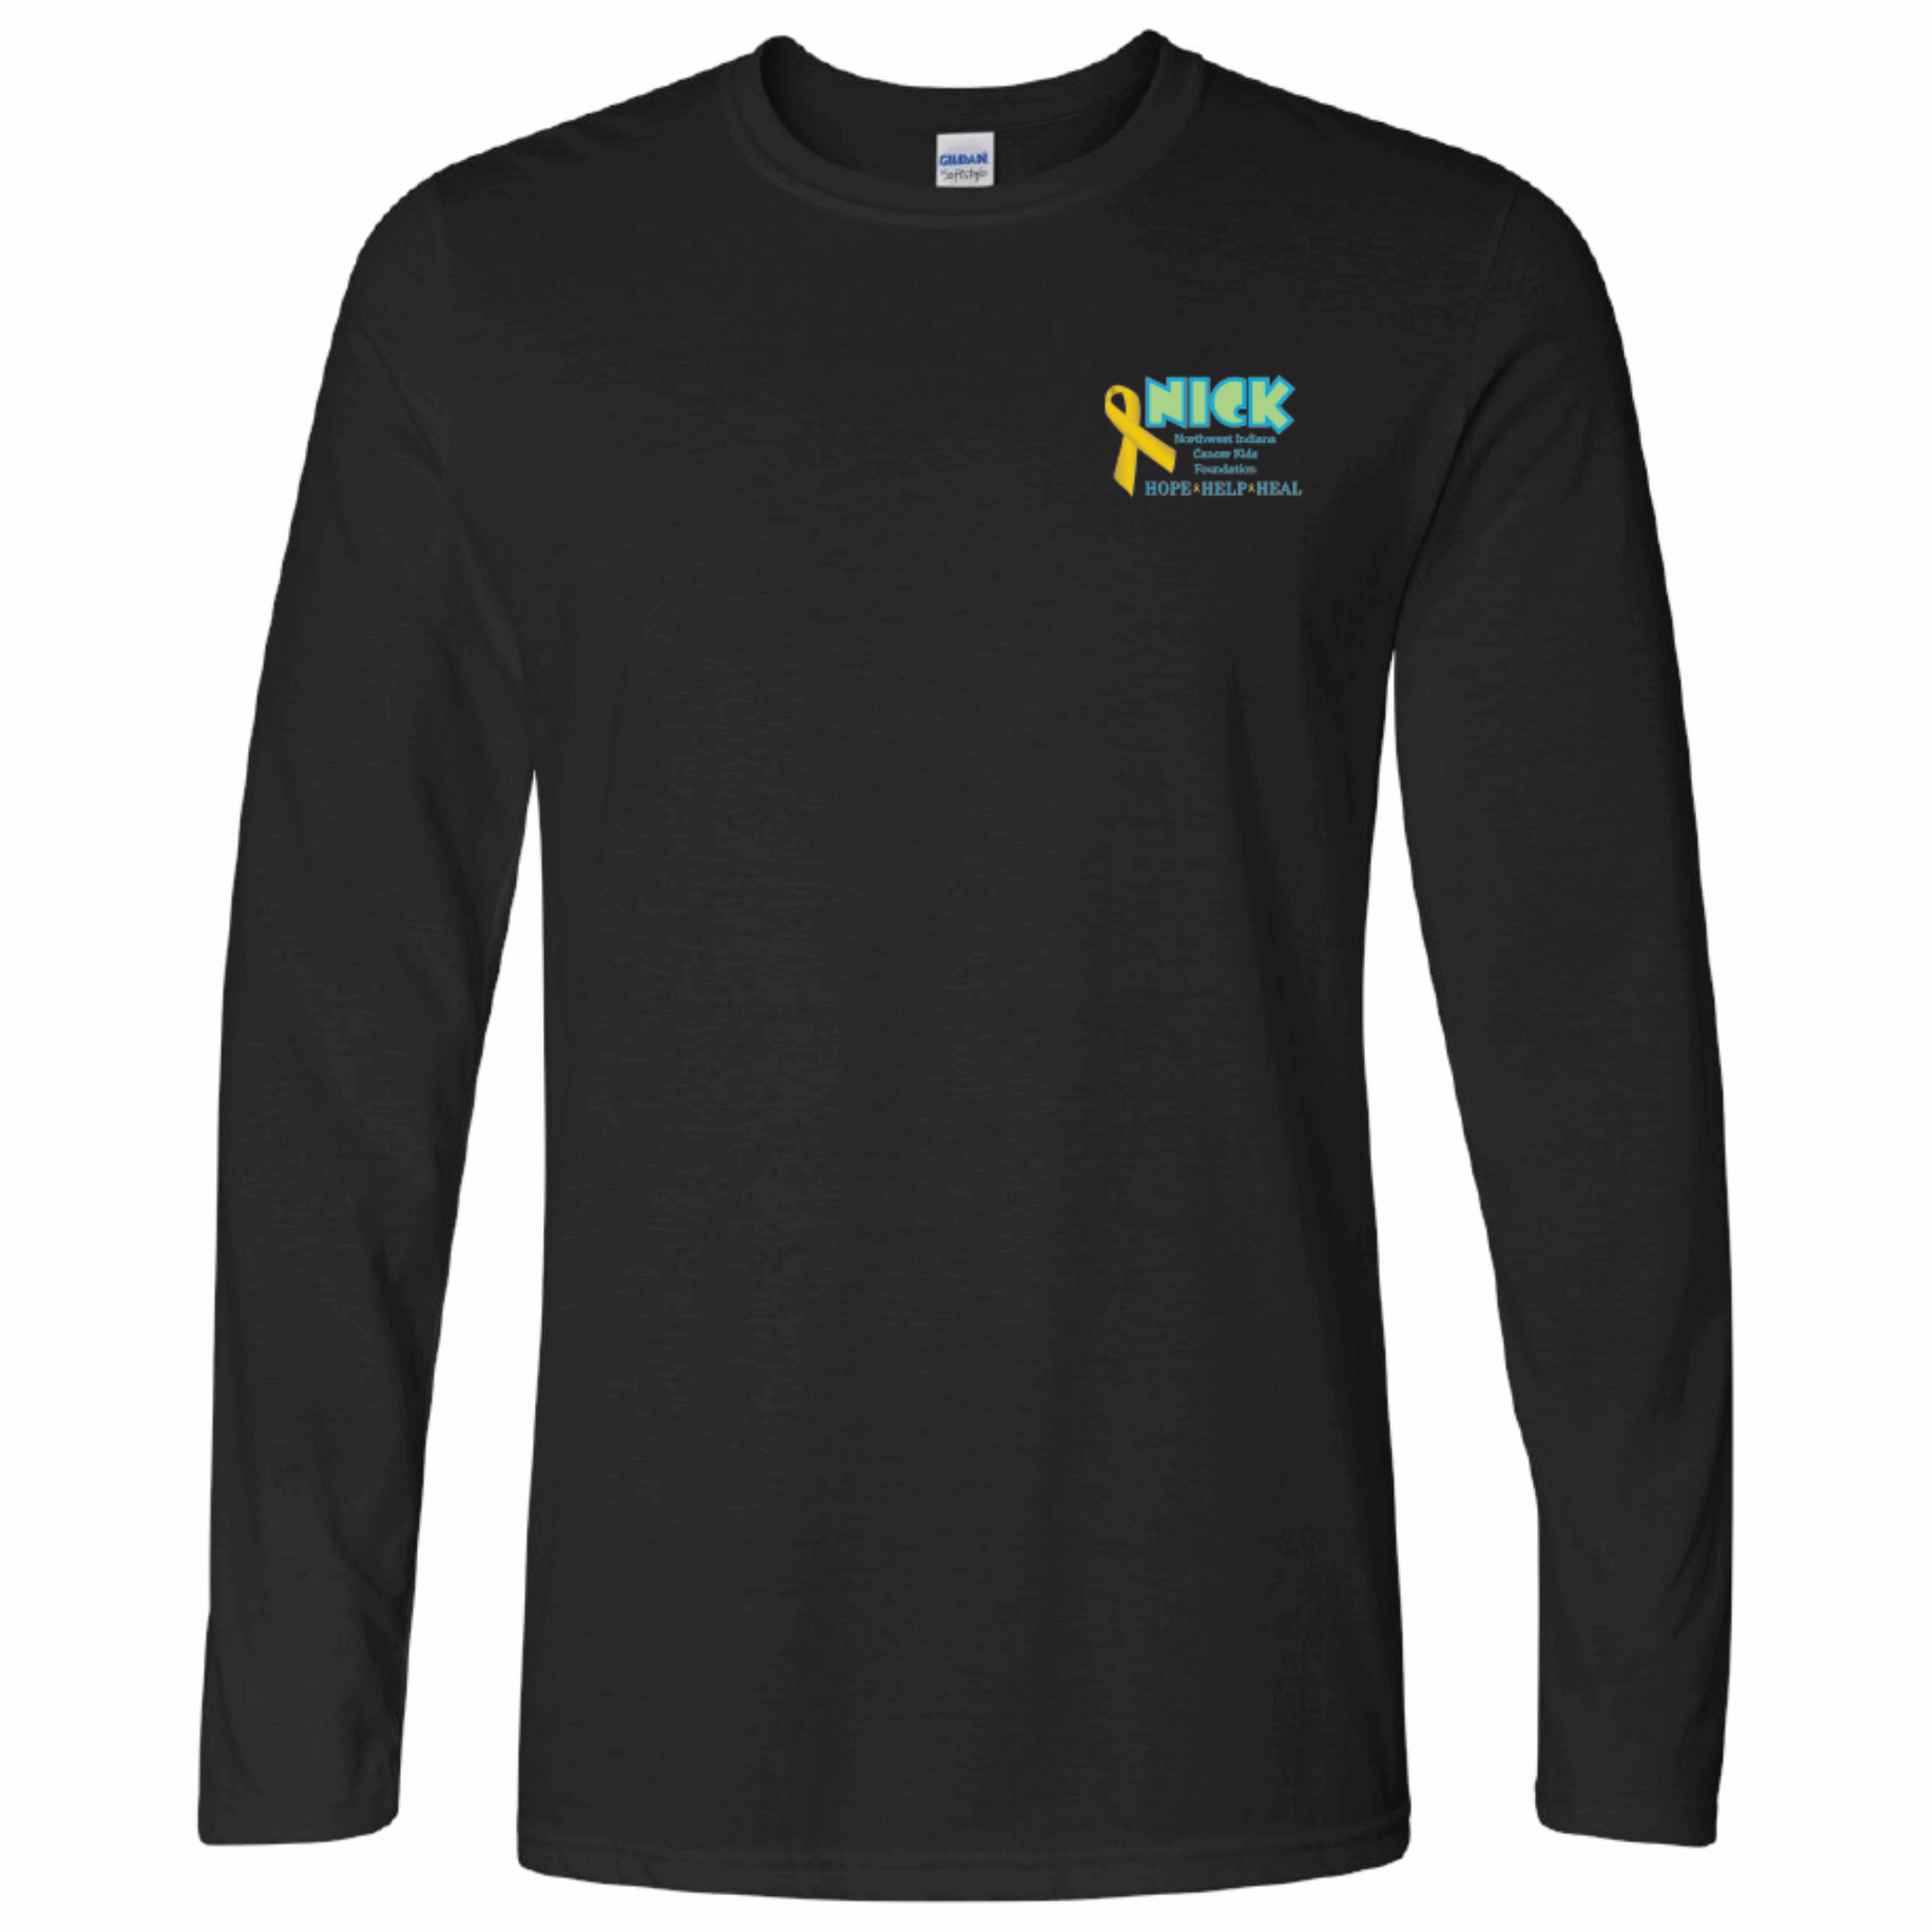 NICK Crew Neck Long Sleeve T Shirt